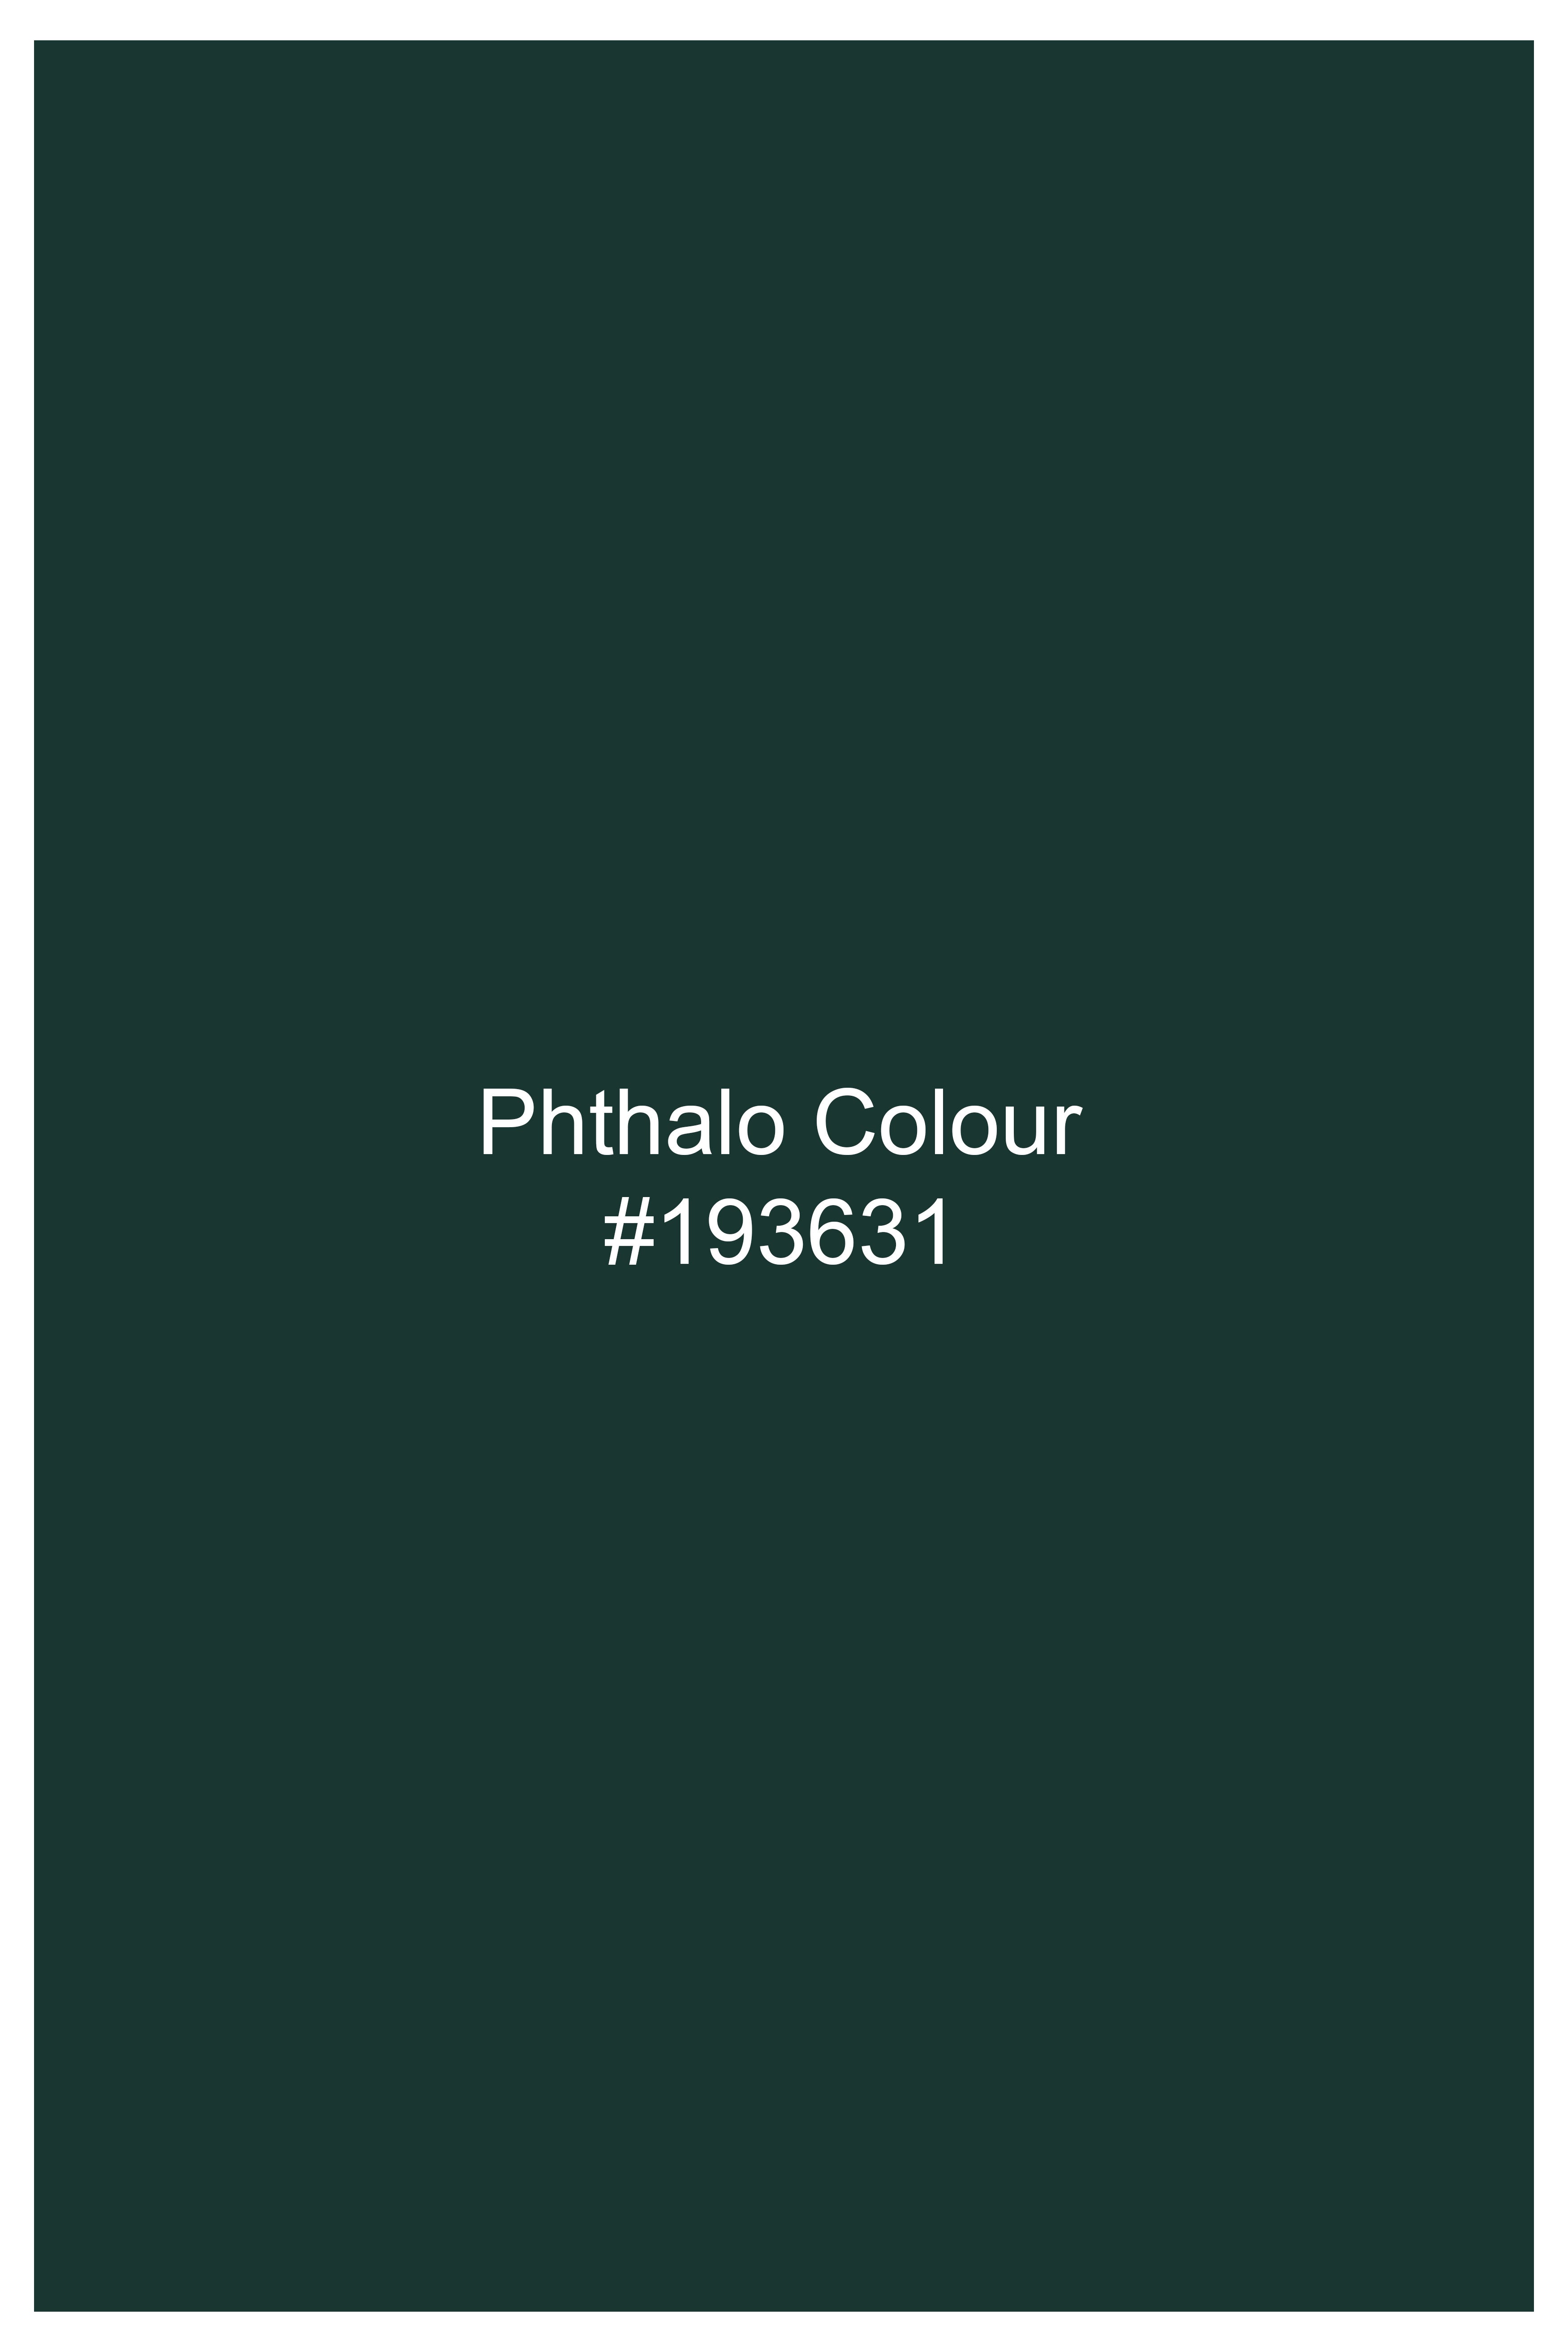 Phthalo Green with Maroon Hotfix Subtle Sheen Super Soft Premium Cotton Designer Shirt 12024-GR-NP-P853-38, 12024-GR-NP-P853-H-38, 12024-GR-NP-P853-39, 12024-GR-NP-P853-H-39, 12024-GR-NP-P853-40, 12024-GR-NP-P853-H-40, 12024-GR-NP-P853-42, 12024-GR-NP-P853-H-42, 12024-GR-NP-P853-44, 12024-GR-NP-P853-H-44, 12024-GR-NP-P853-46, 12024-GR-NP-P853-H-46, 12024-GR-NP-P853-48, 12024-GR-NP-P853-H-48, 12024-GR-NP-P853-50, 12024-GR-NP-P853-H-50, 12024-GR-NP-P853-52, 12024-GR-NP-P853-H-52